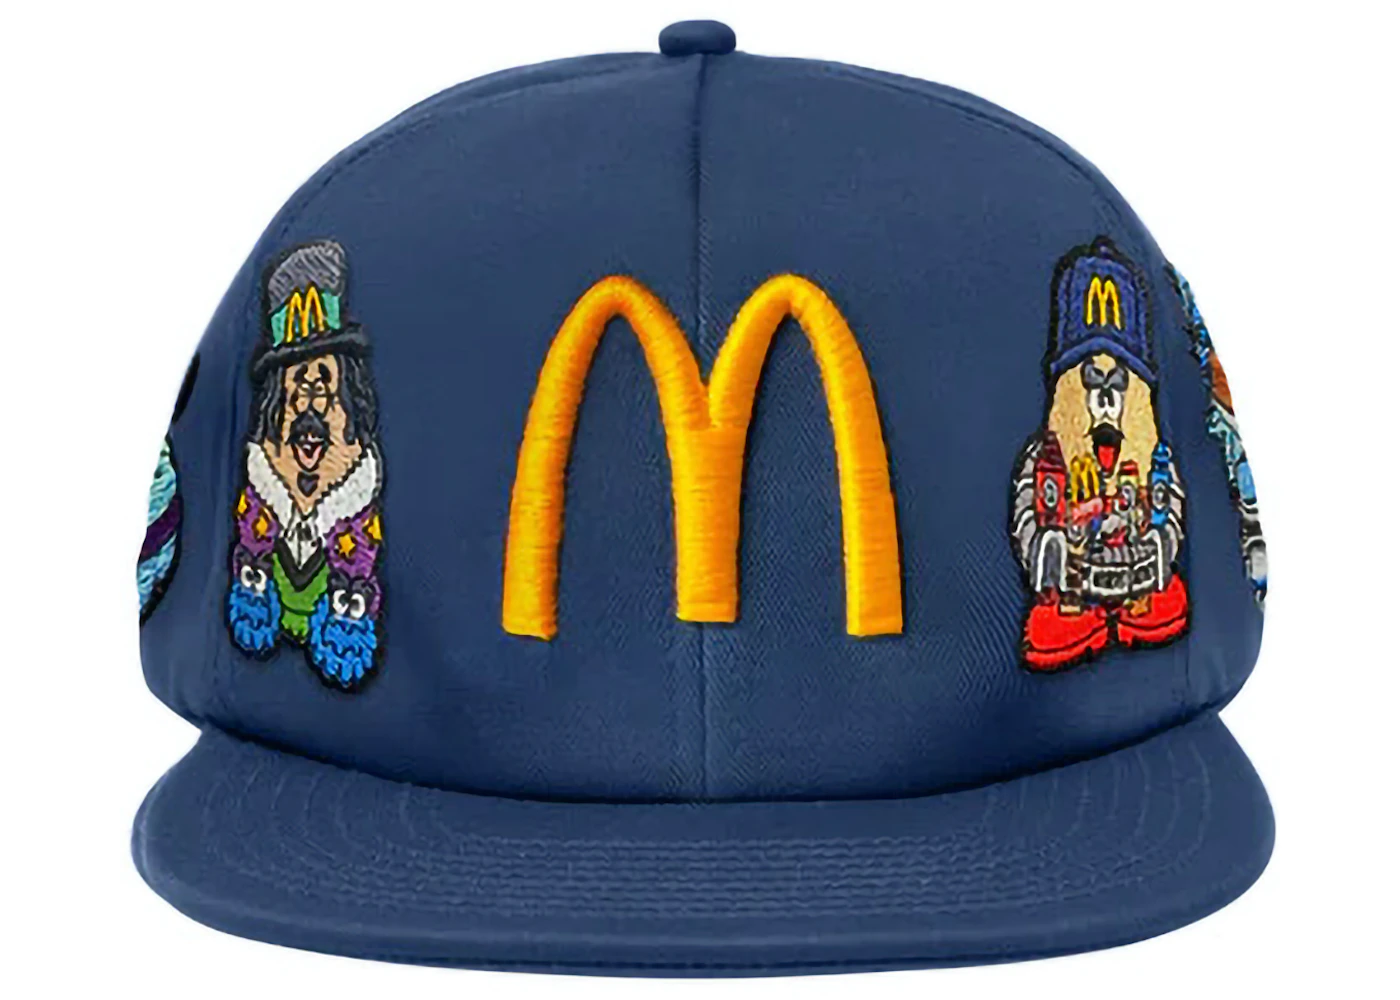 Kerwin Frost x McDonald's Uptown Moe Logo Fitted Cap Navy - FW23 - US